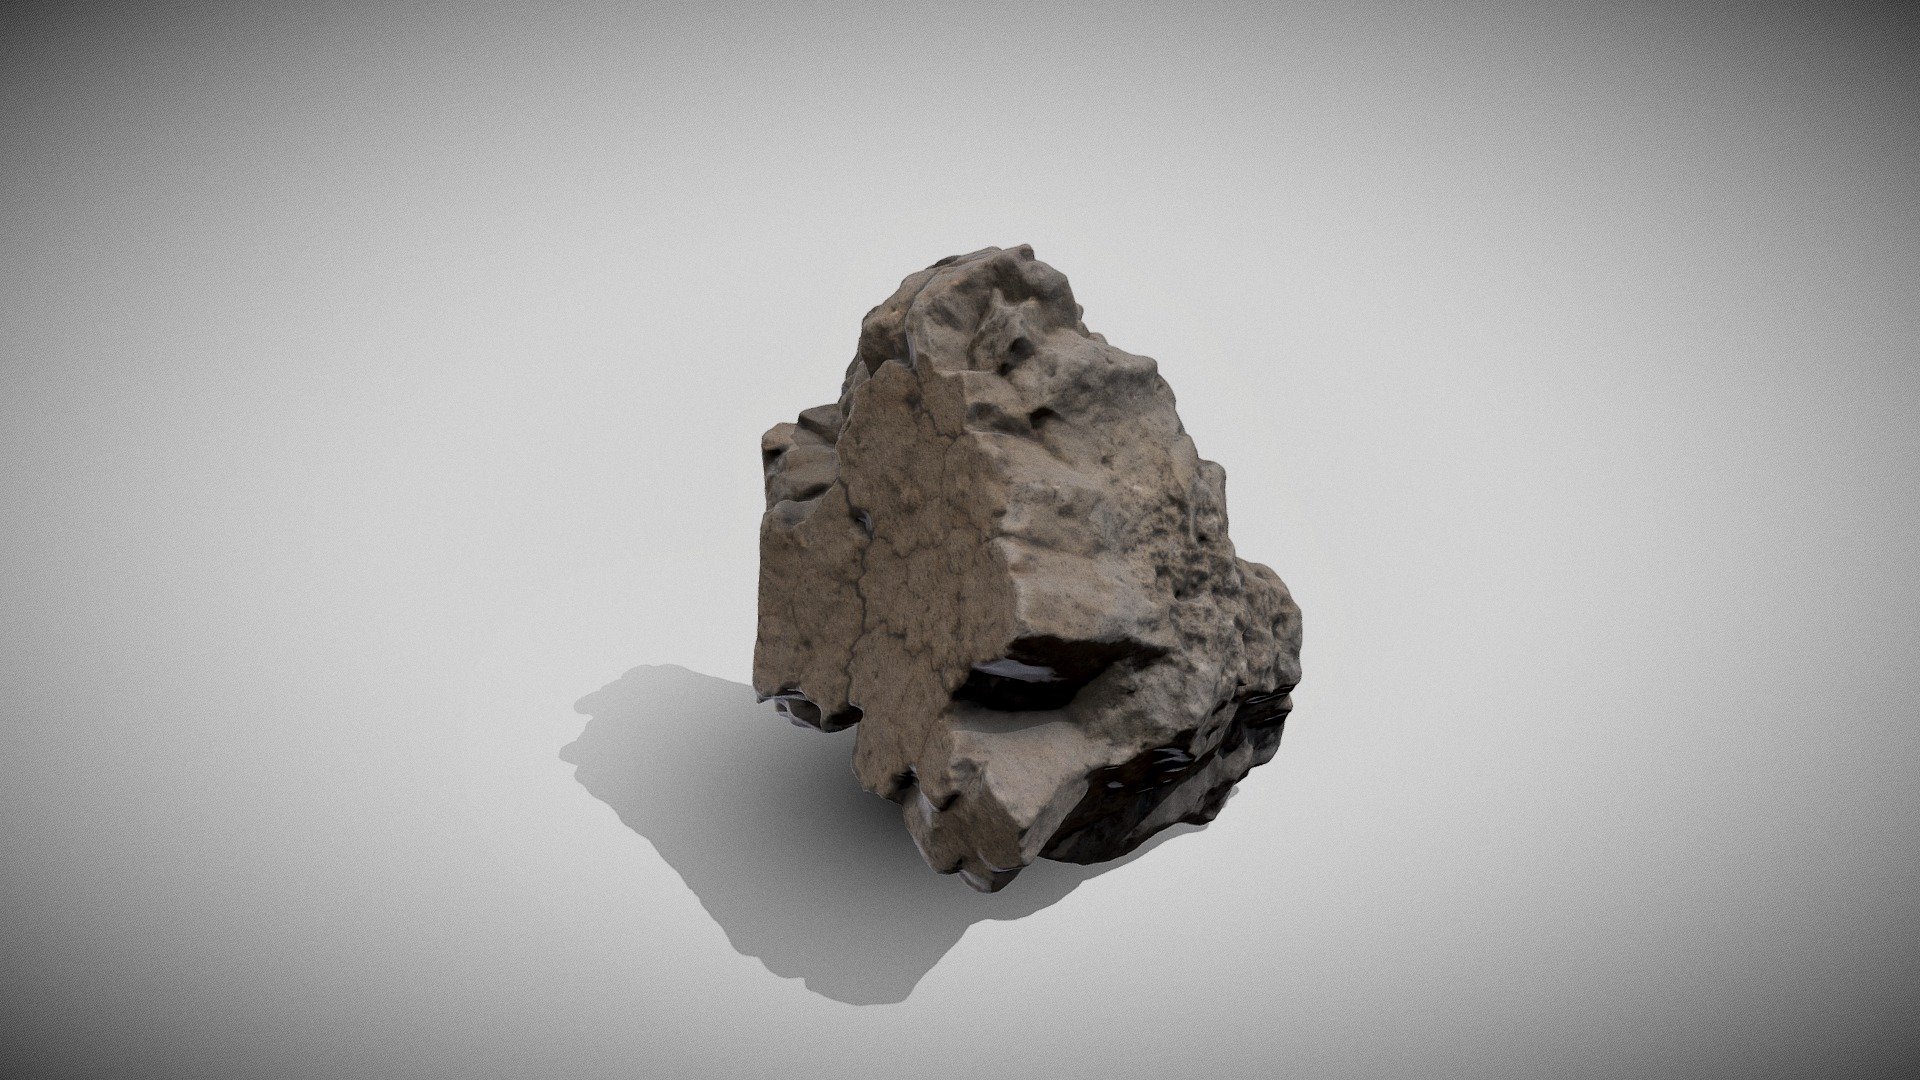 Small breadcrust bomb from Obsidian Dome, CA